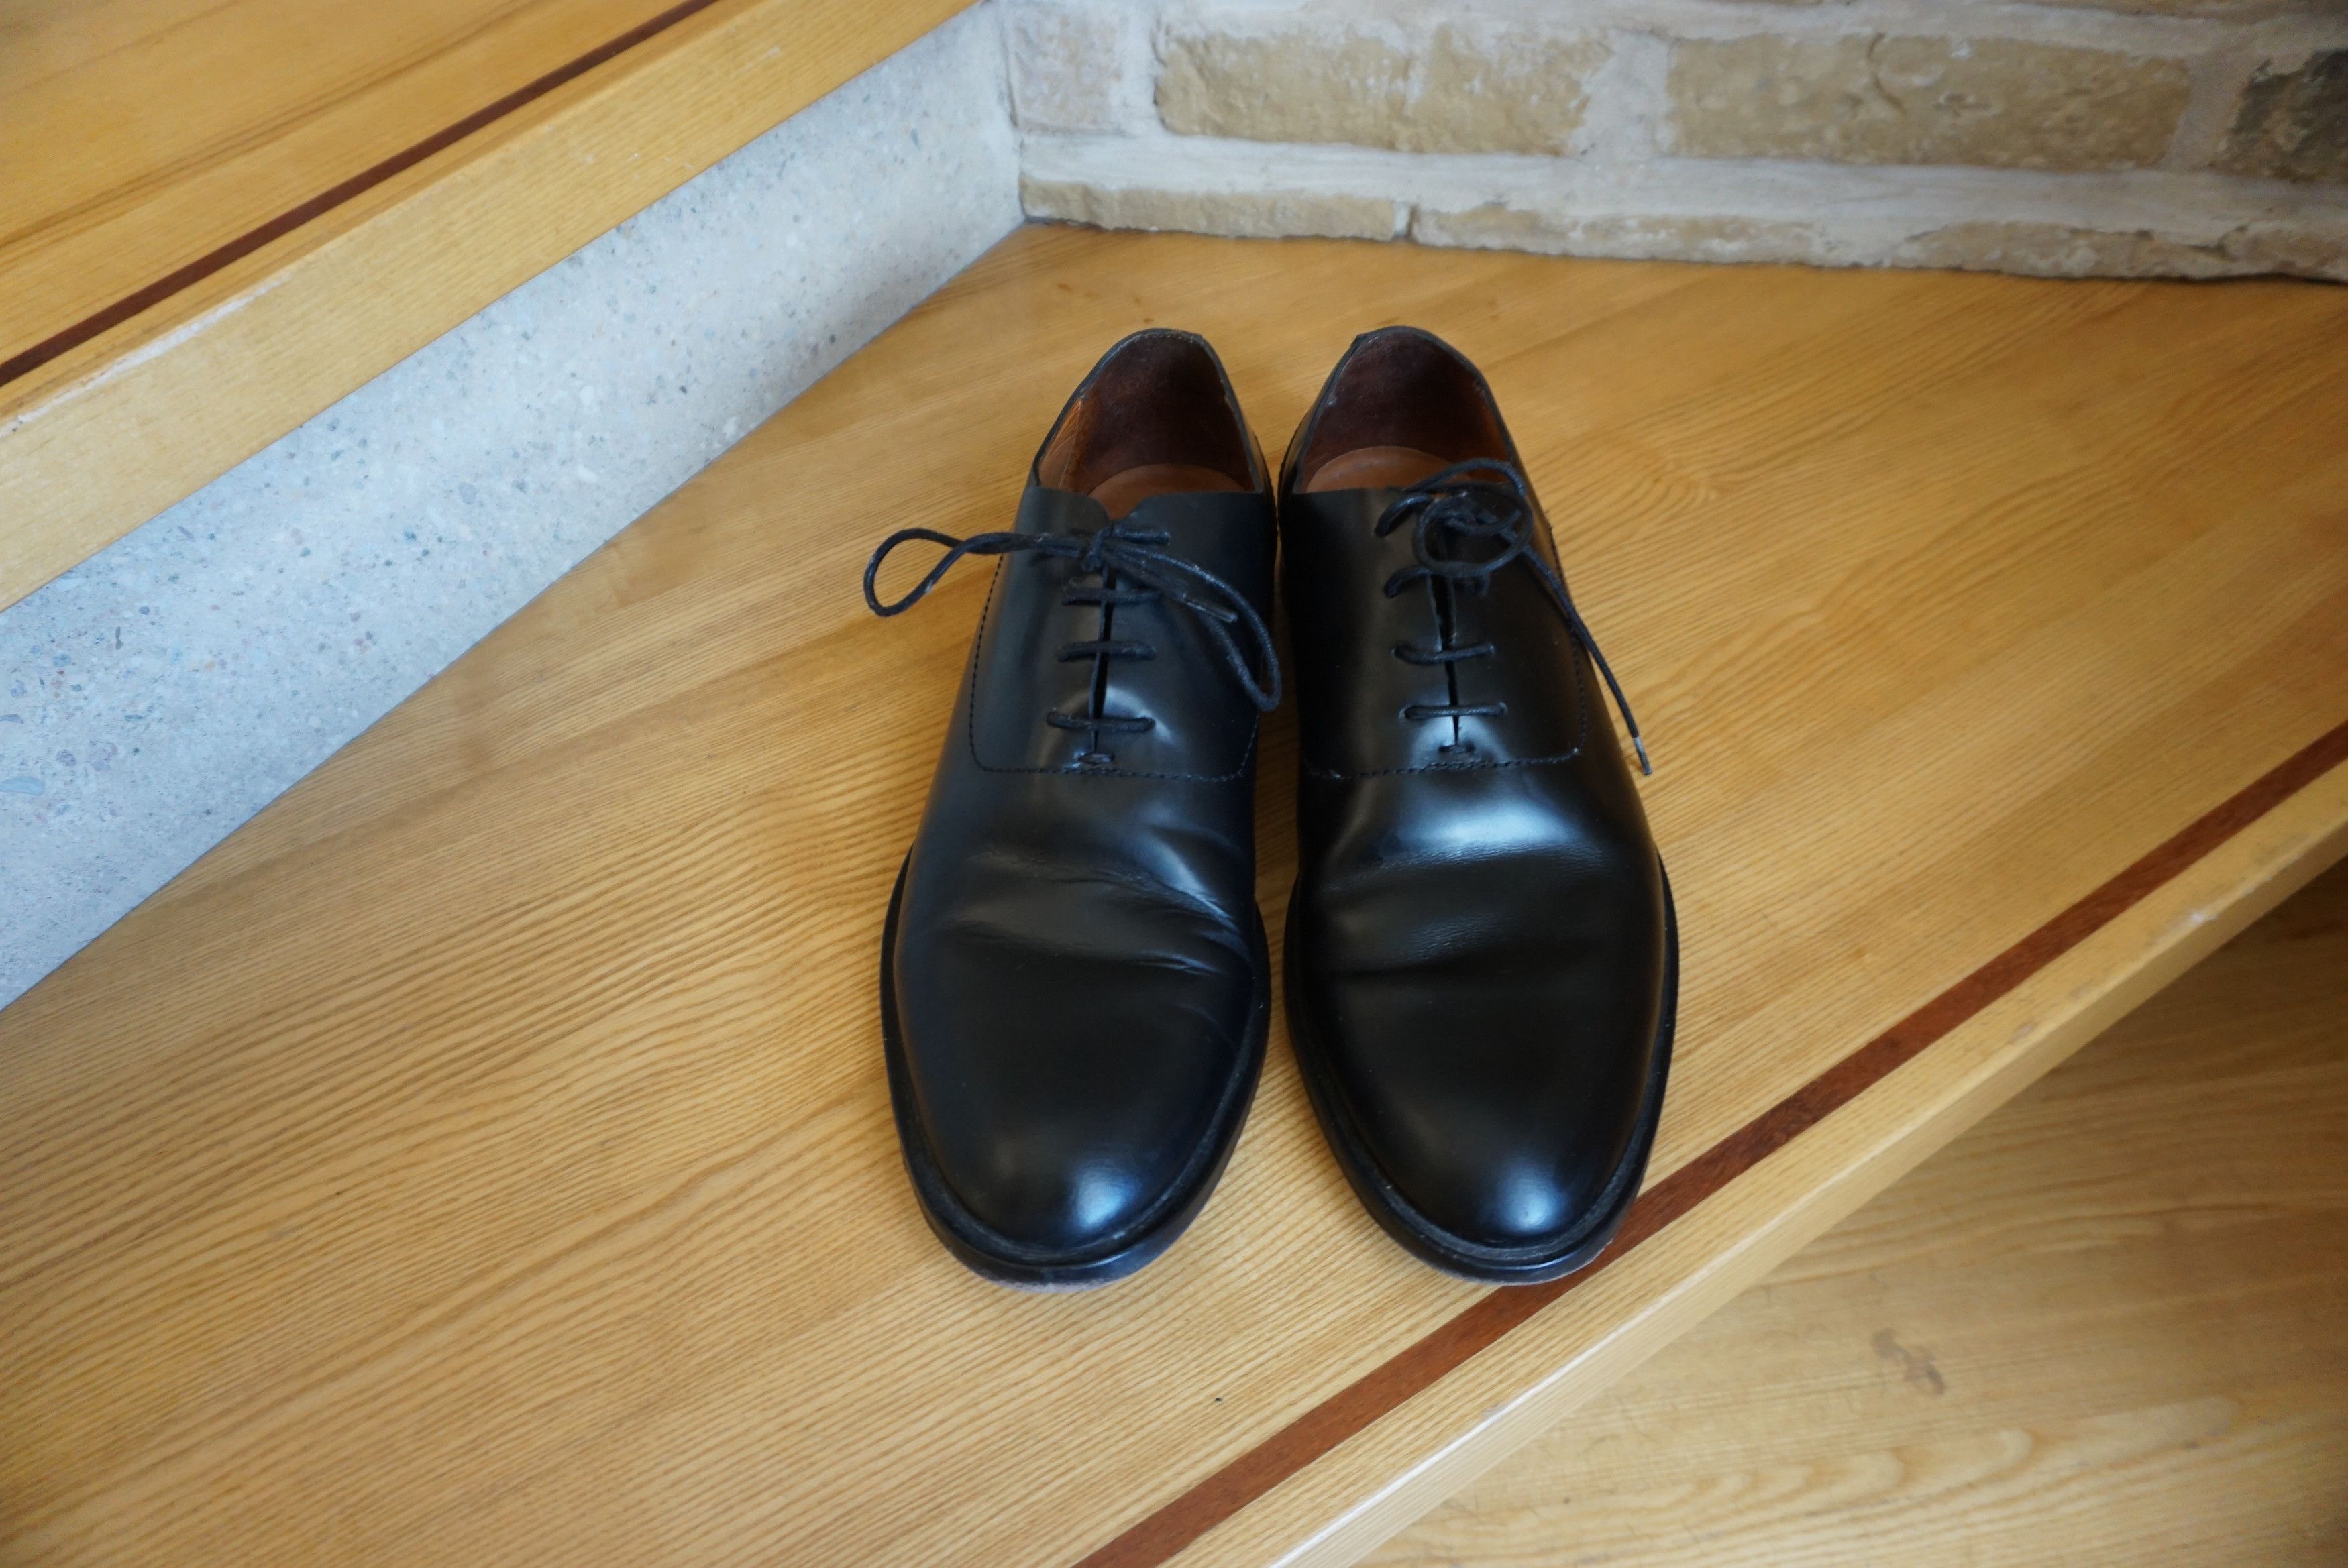 Cos COS RPR$250 leather office shoes EU44 black formal lace up Size US 10.5 / EU 43-44 - 13 Thumbnail